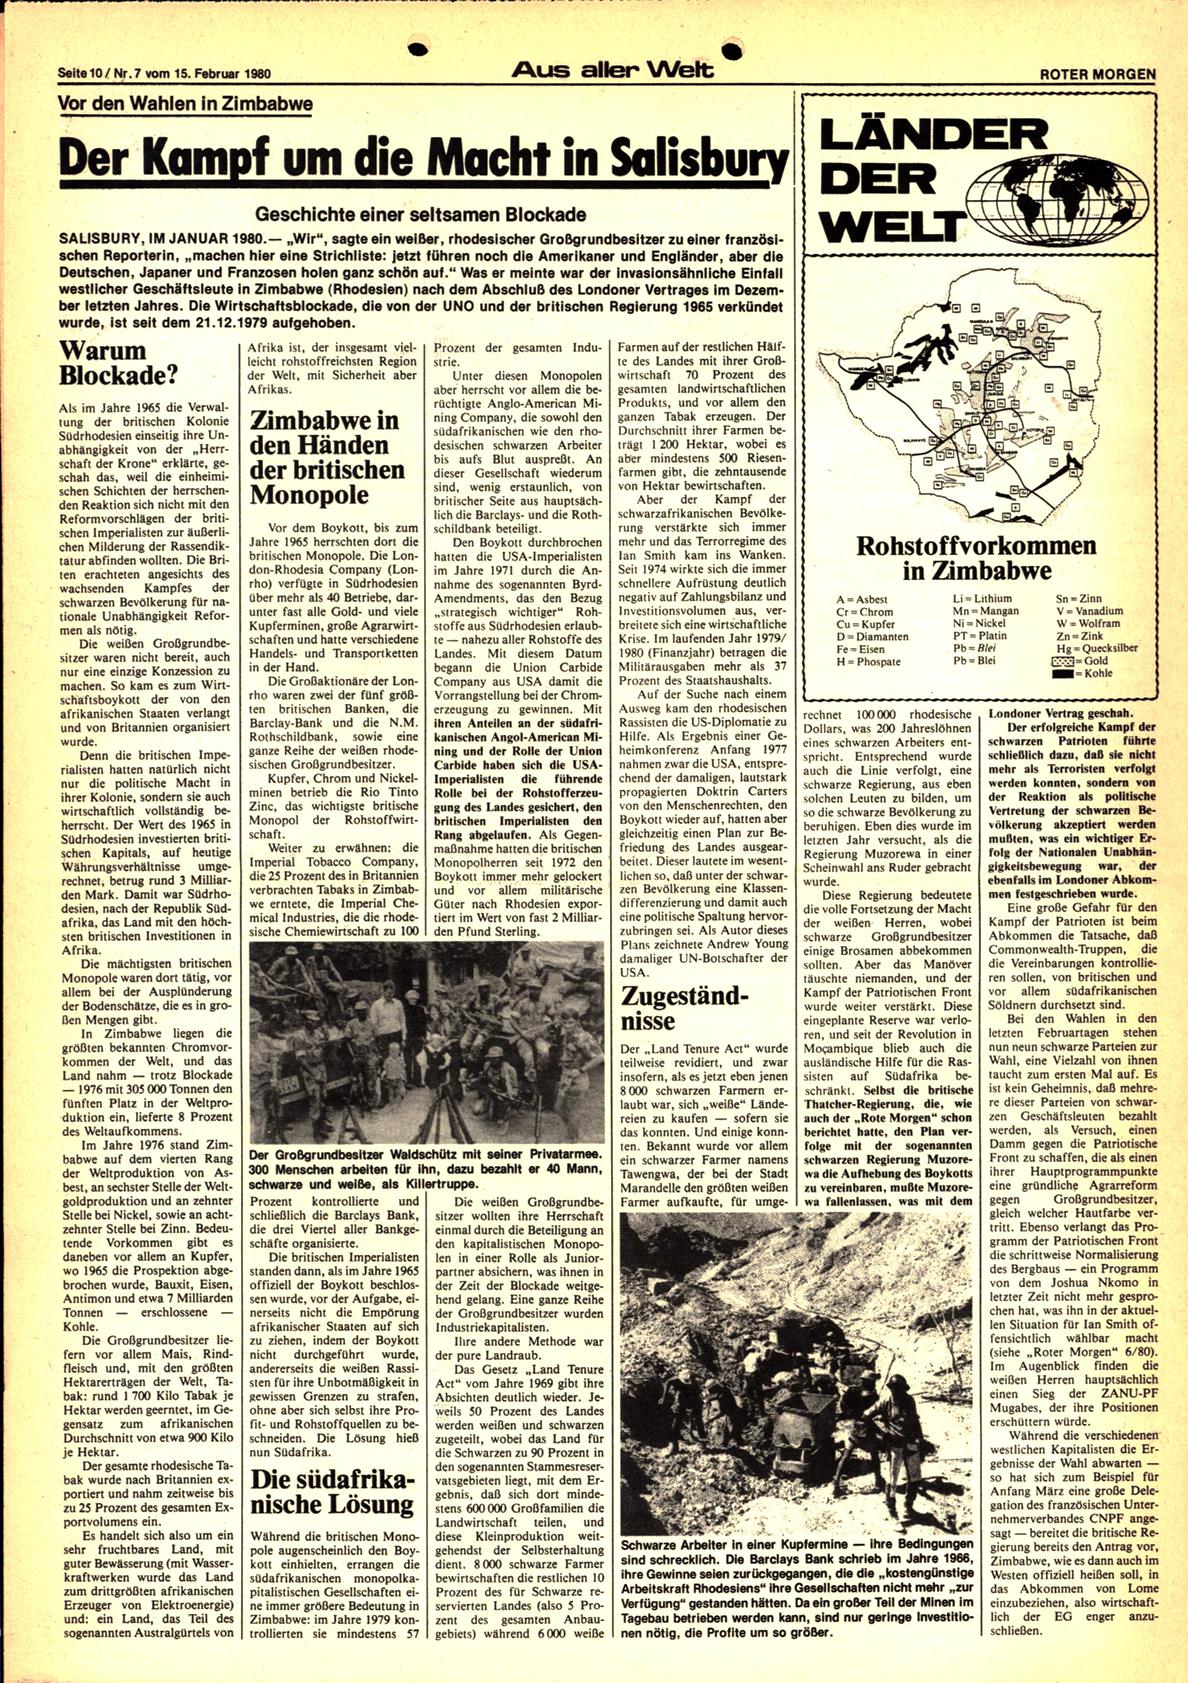 Roter Morgen, 14. Jg., 15. Februar 1980, Nr. 7, Seite 10